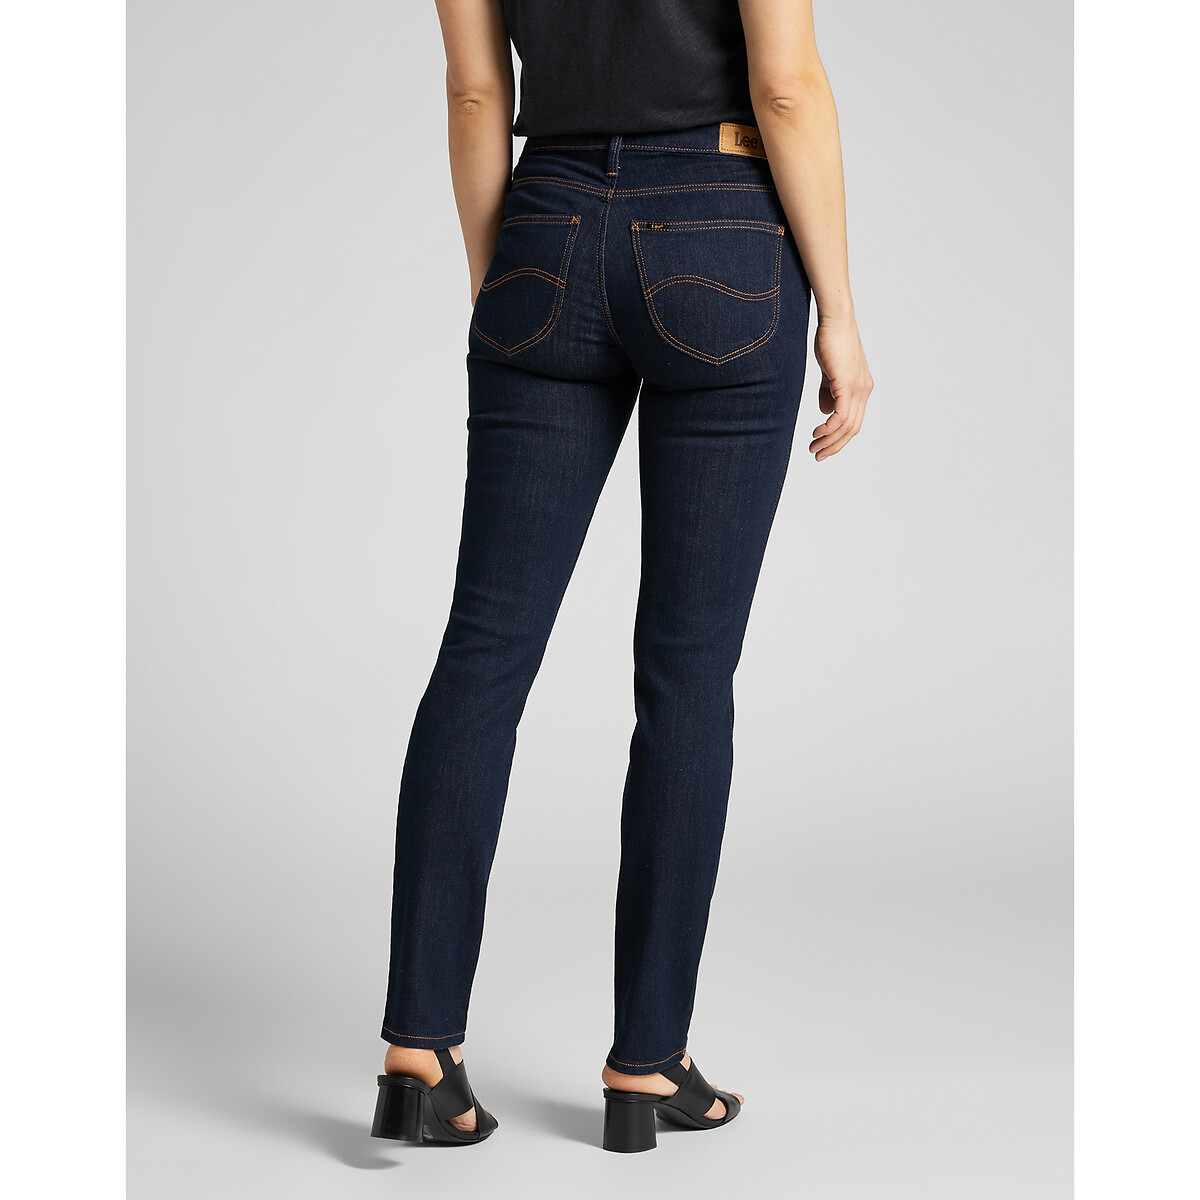 High-waist-jeans elly, slim-fit Lee La Redoute